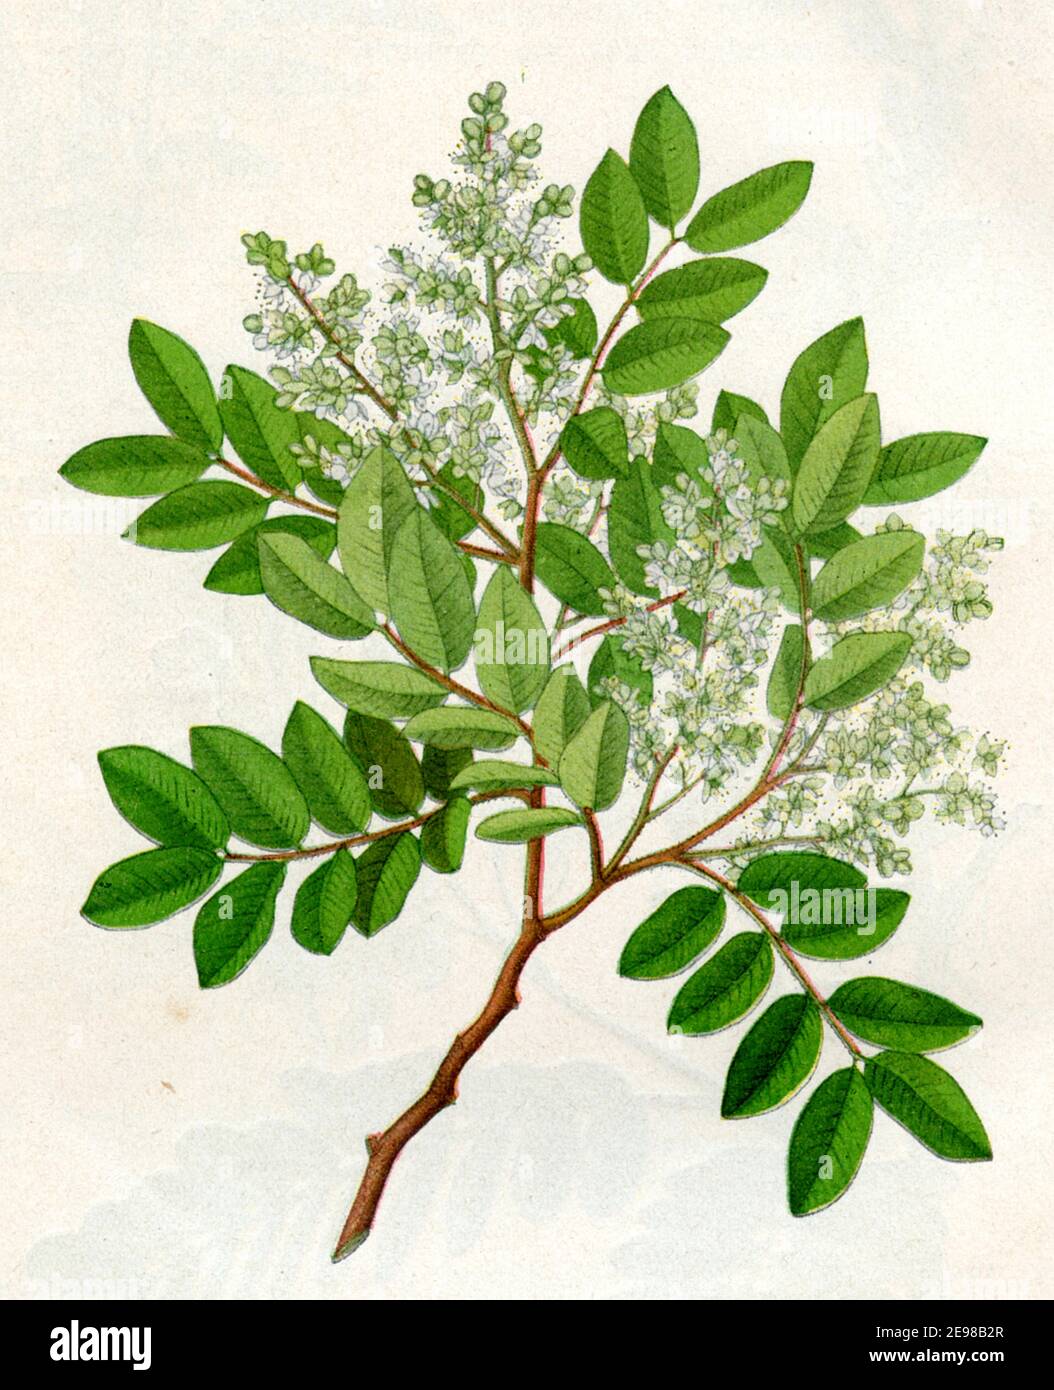 copaifera, diesel tree / Copaifera langsdorffii, Syn. Copaifera officinalis / Copaiva  / botany book, 1900) Stock Photo